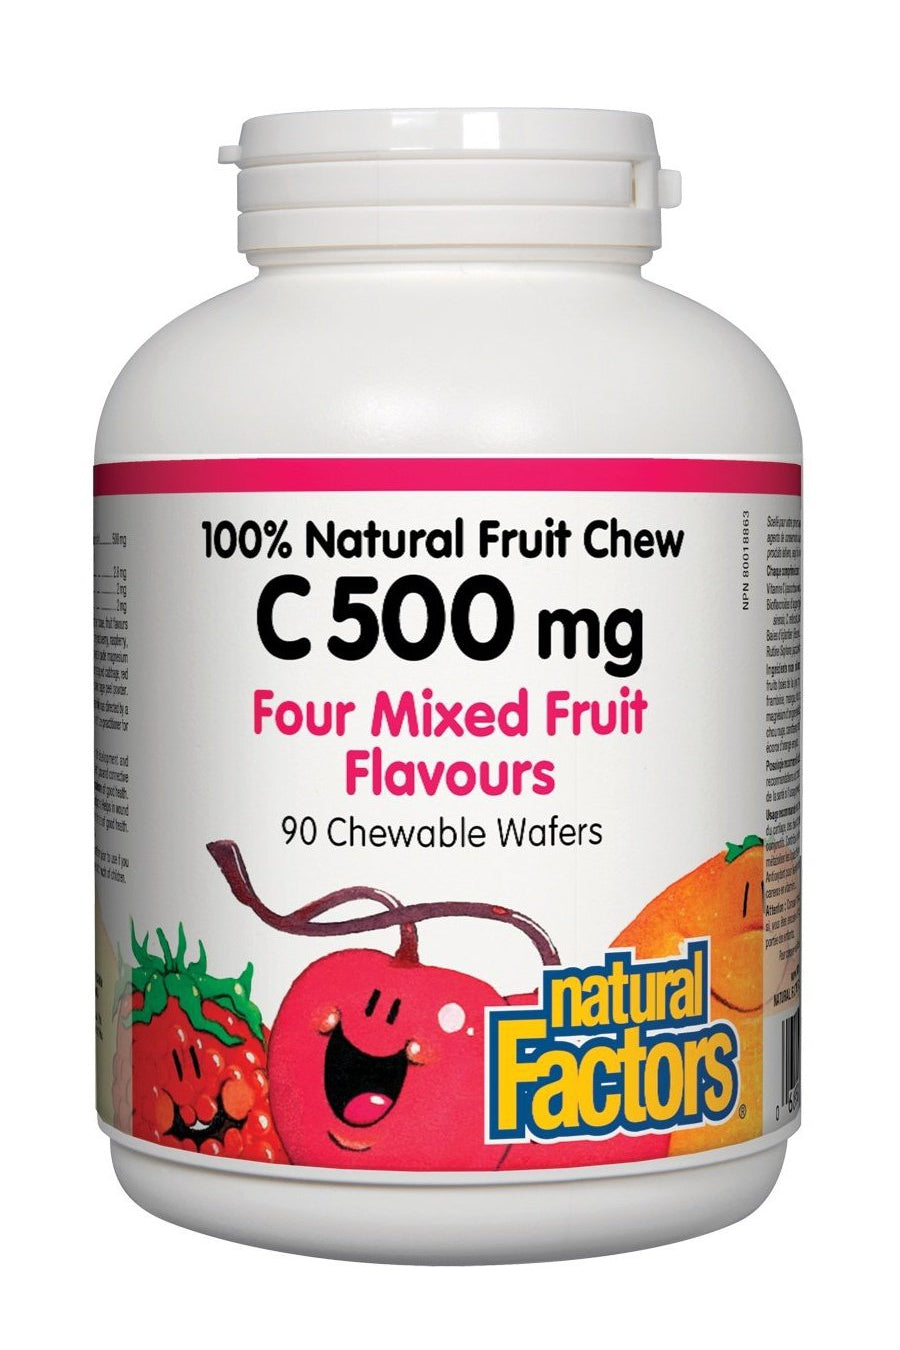 Natural Factors C 500 mg 100% Natural Fruit Chew - Four Mixed Fruit Flavours 90s